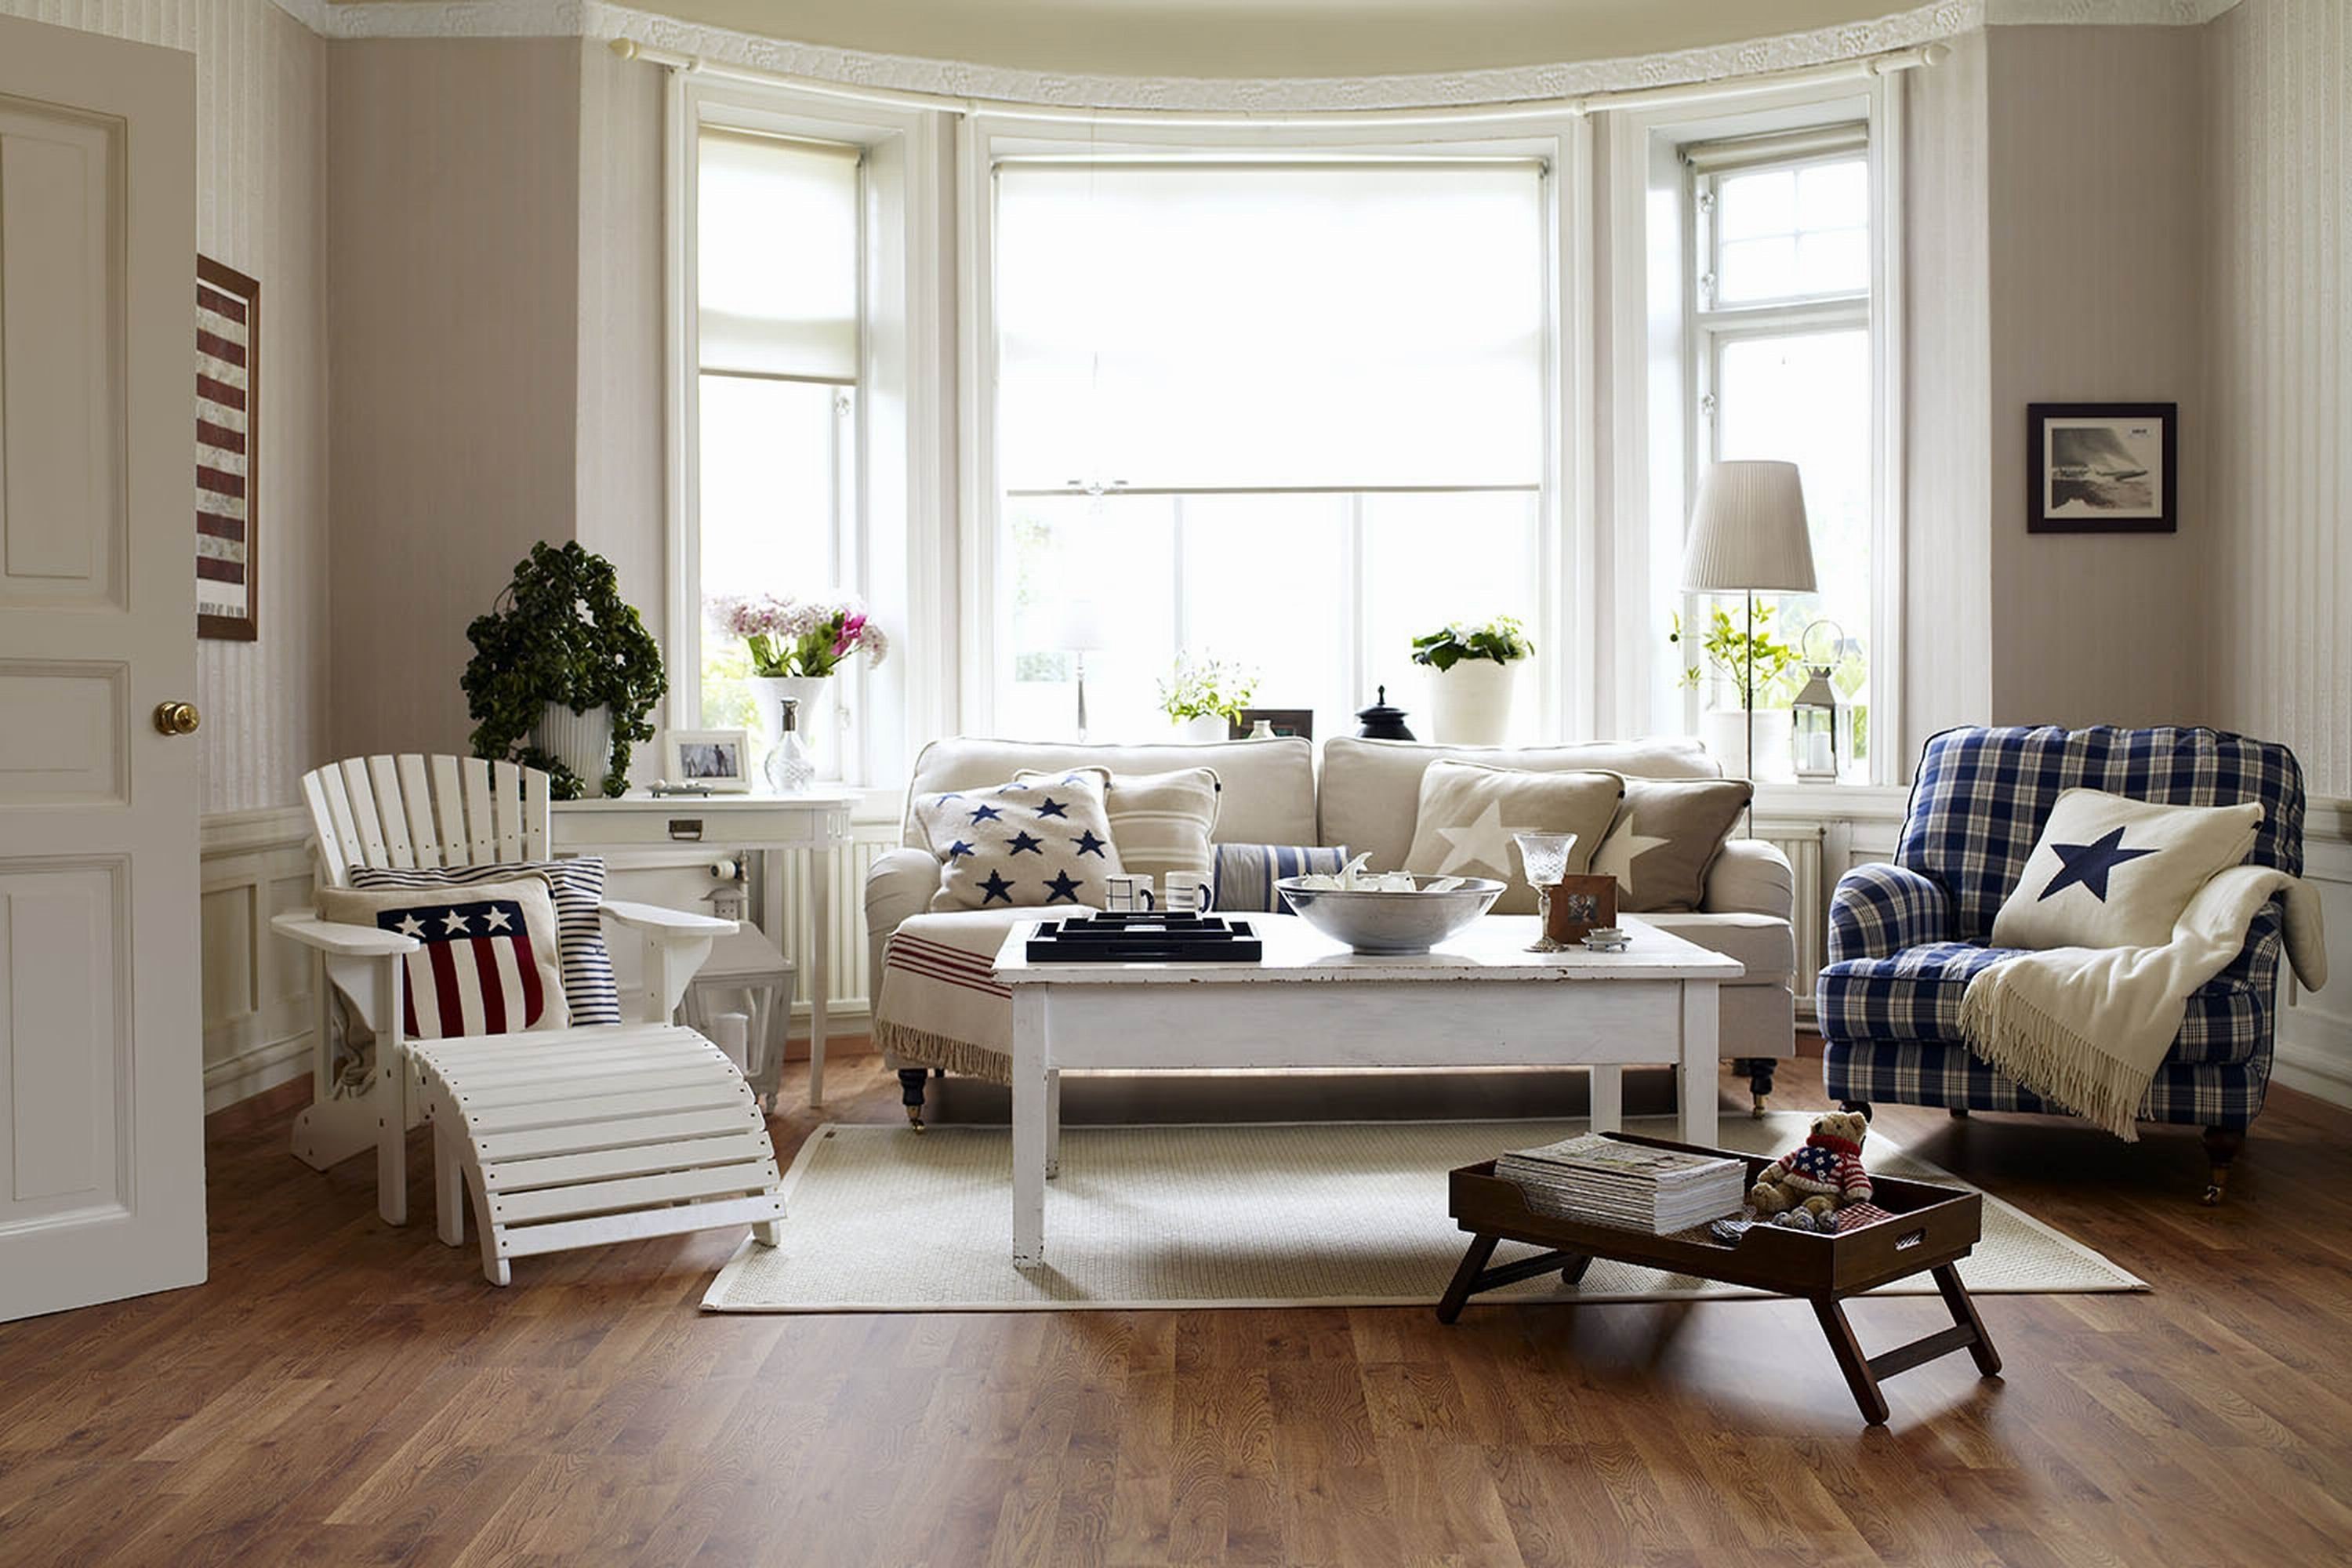 There are chairs in the living room. Американский стиль в интерьере. Цвет пола в интерьере. Светлые стены в интерьере. Мебель в стиле американская классика.